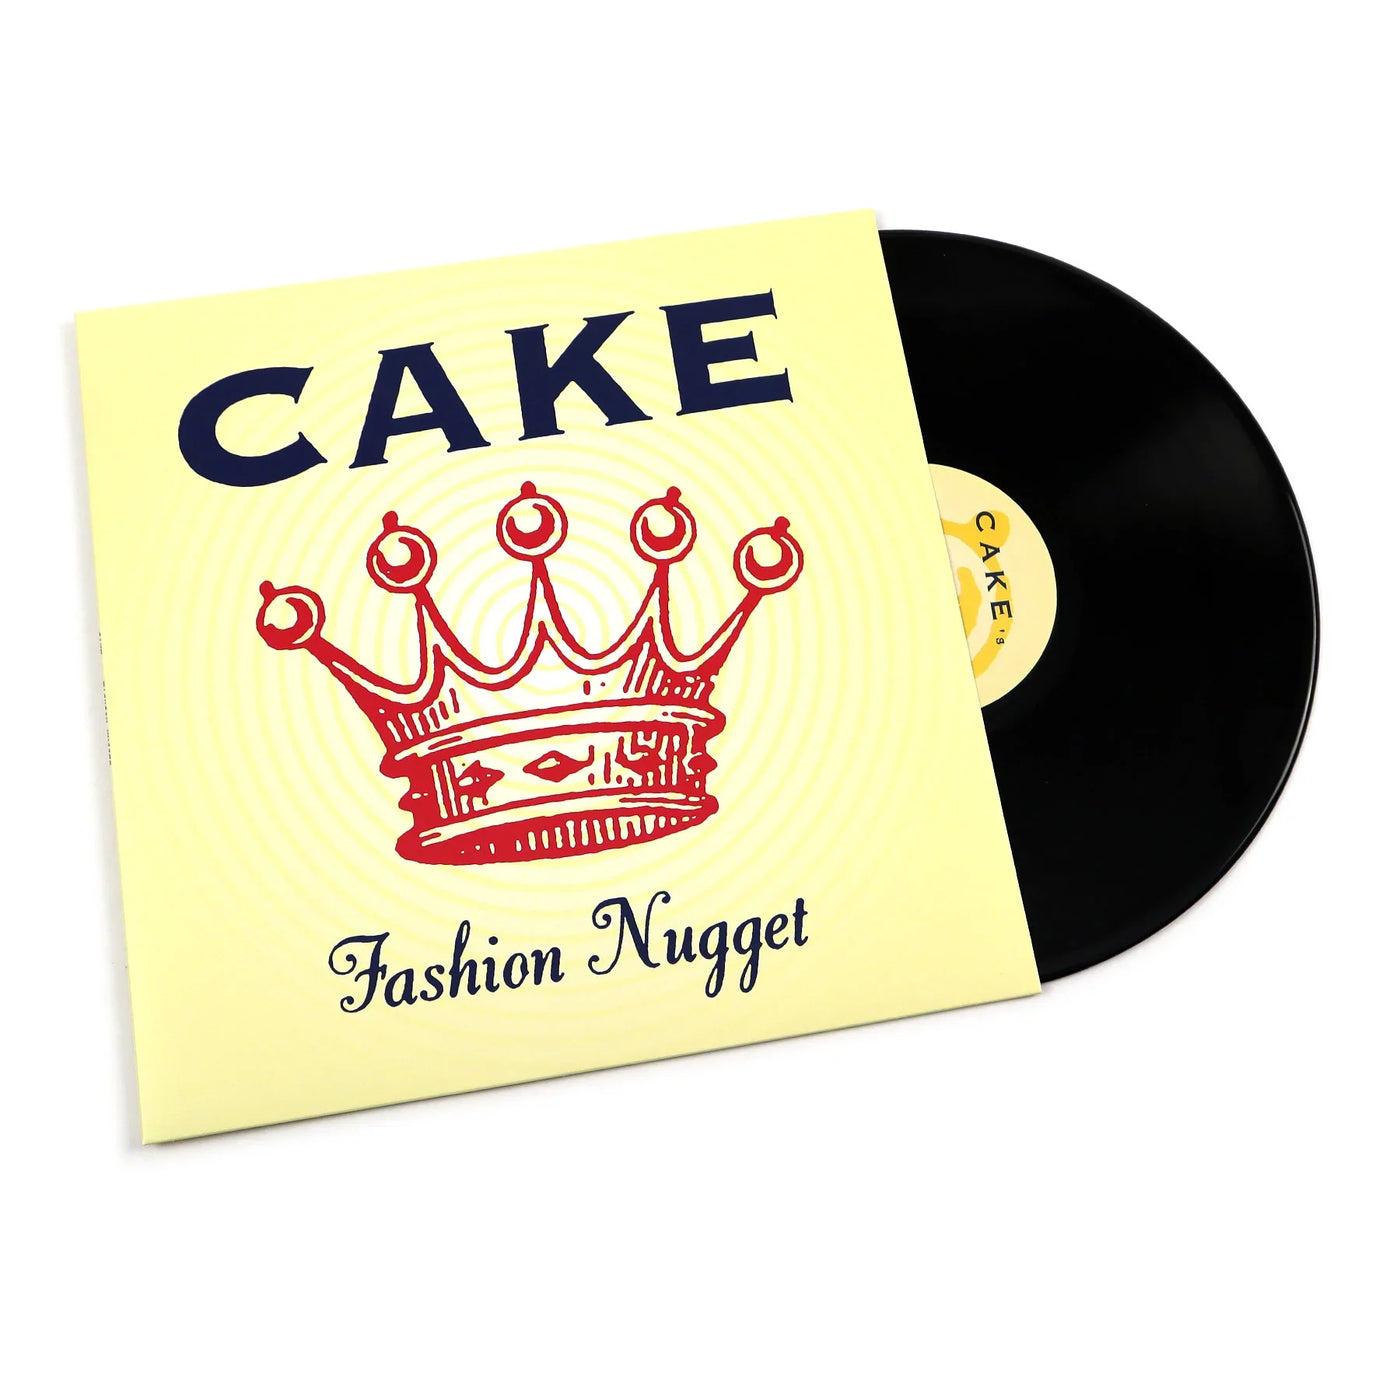 NEW/SEALED! Cake - Fashion Nugget (180 Gram Vinyl, Remastered, Reissue)